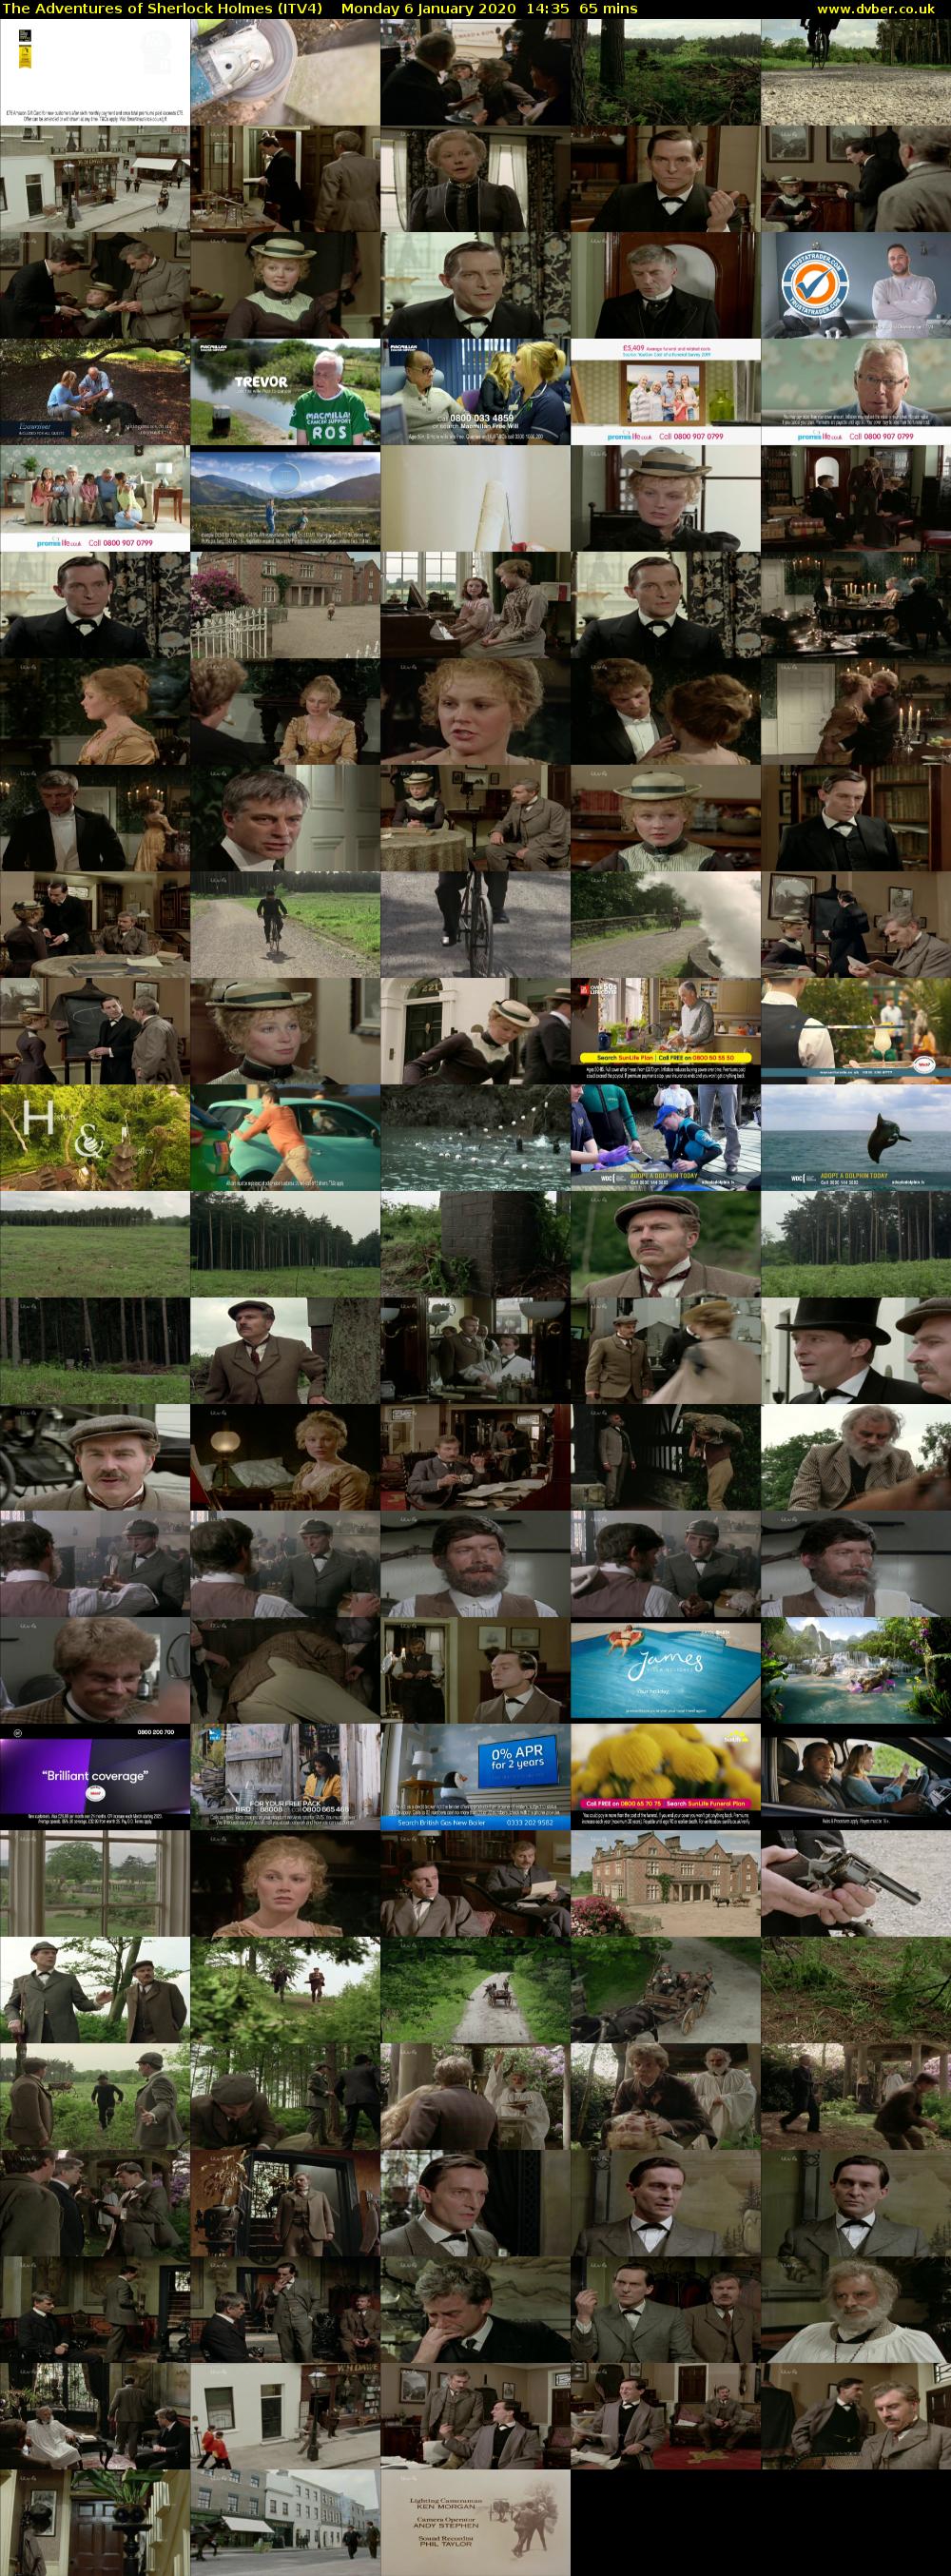 The Adventures of Sherlock Holmes (ITV4) Monday 6 January 2020 14:35 - 15:40